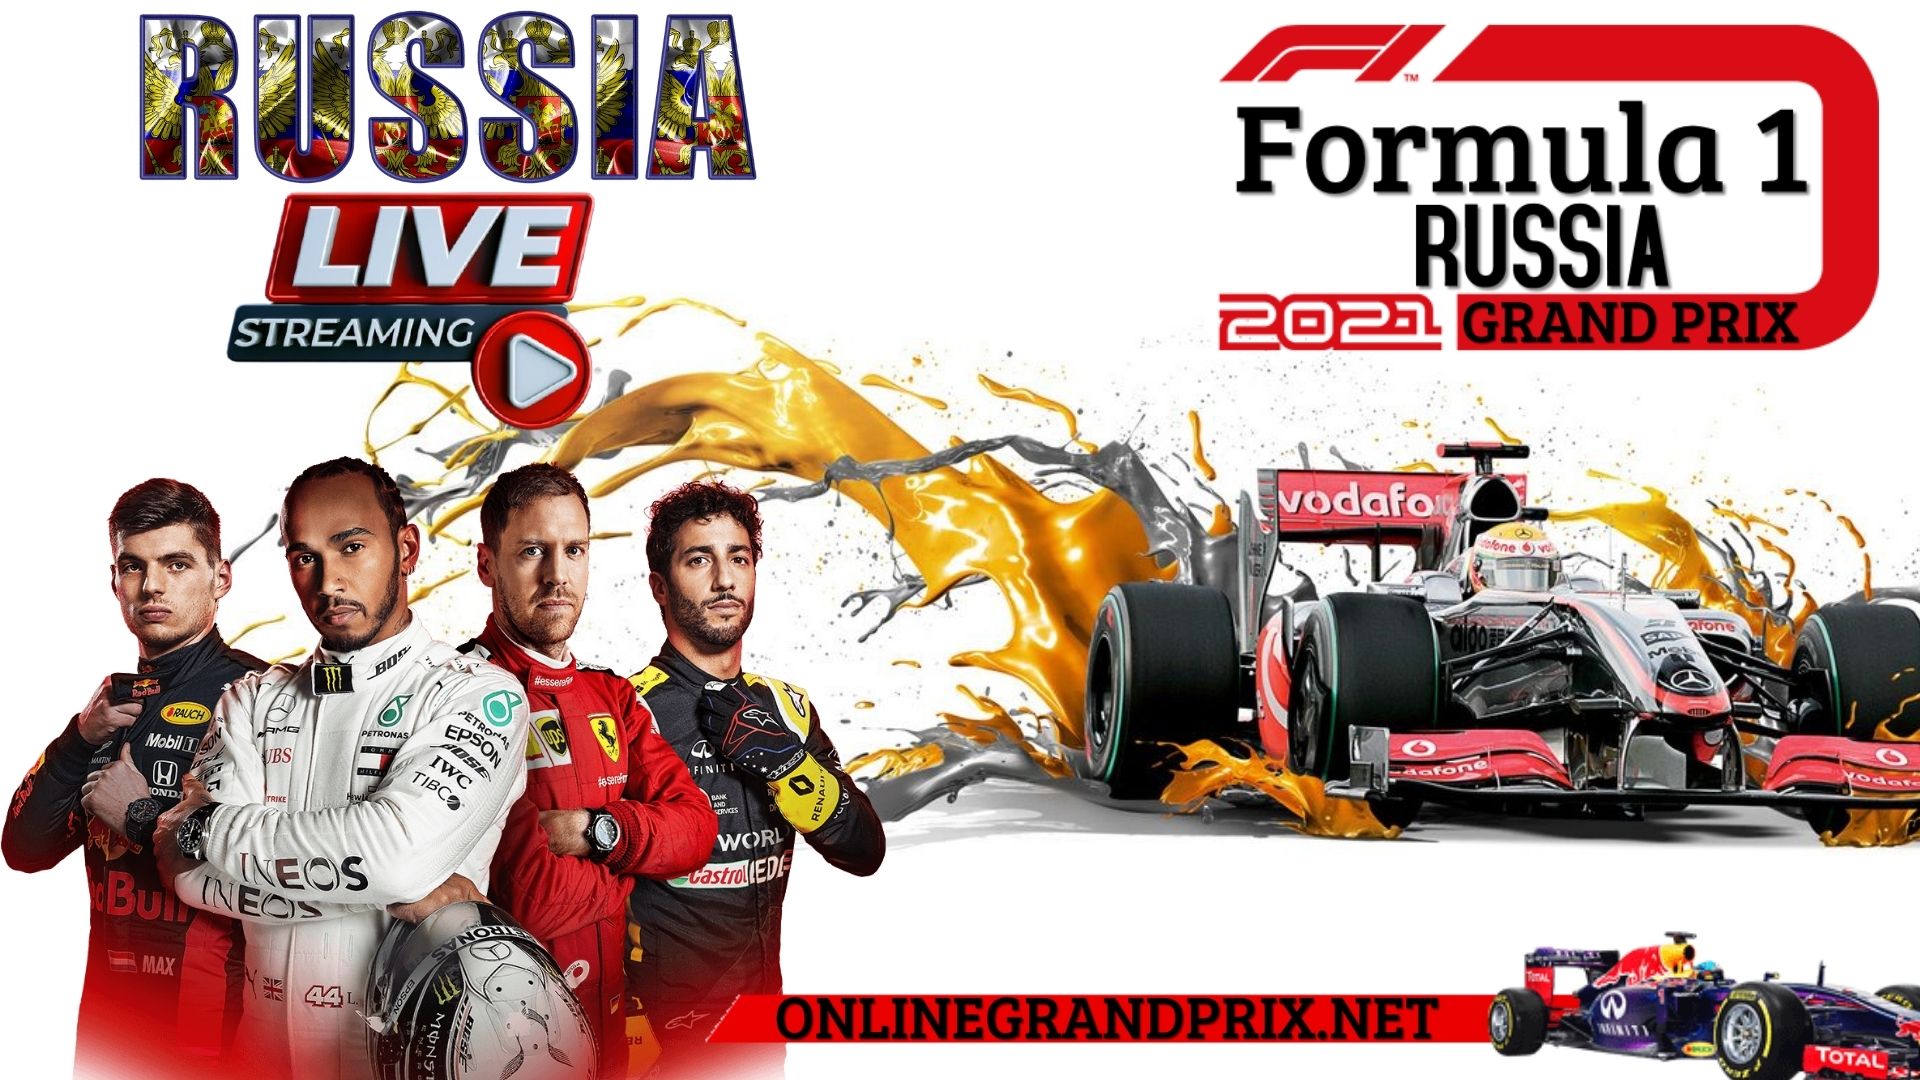 2018 Russian Grand Prix Of Formula1 Live Online